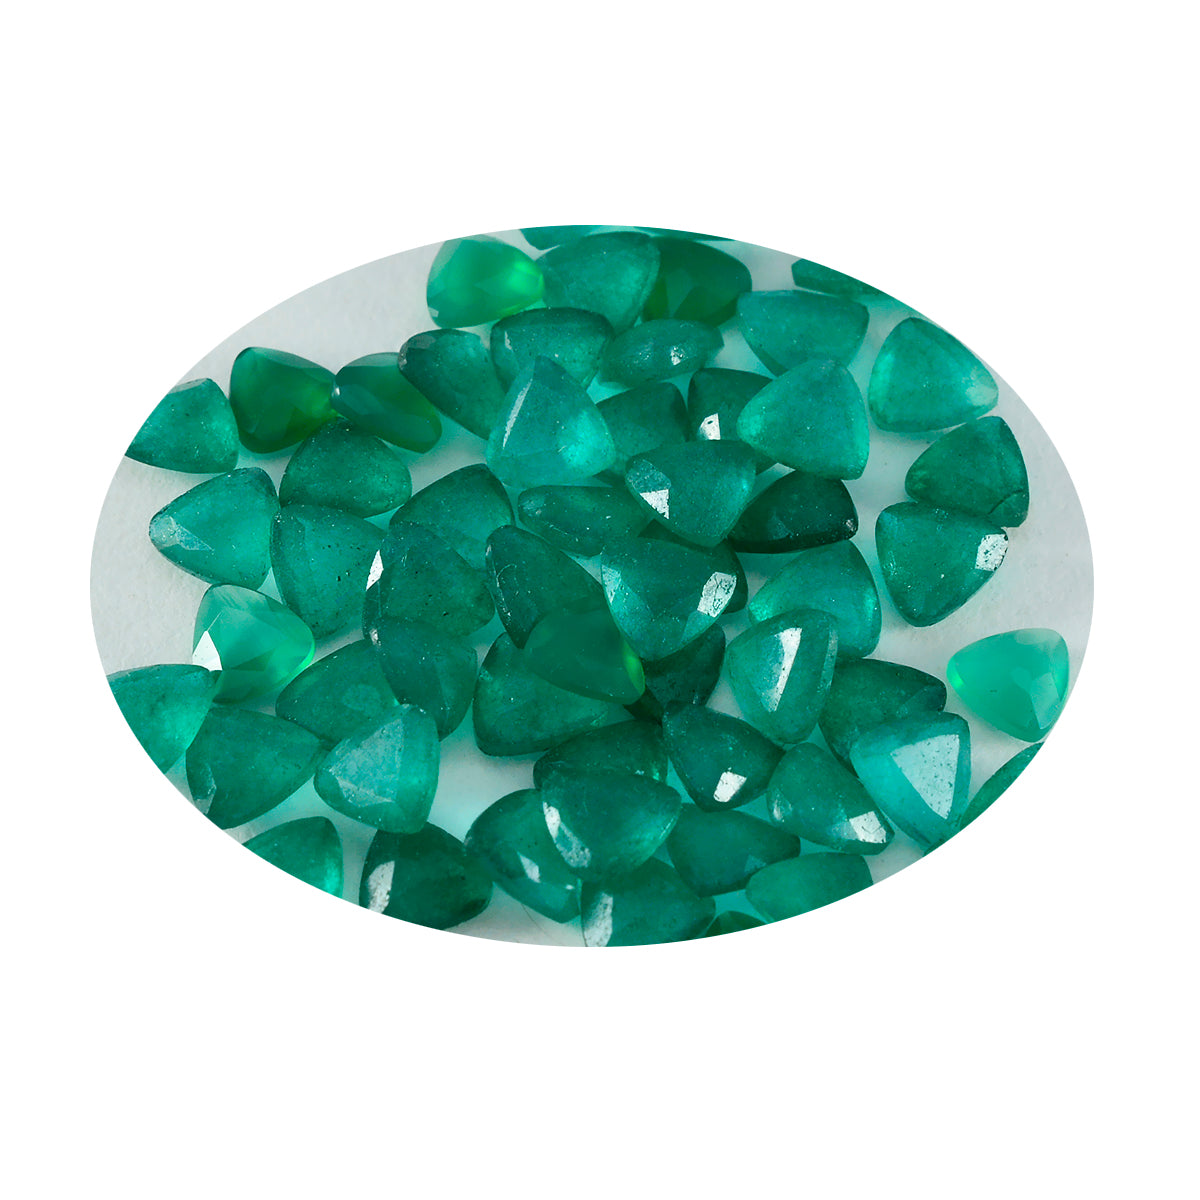 Riyogems 1PC Natural Green Jasper Faceted 7x7 mm Trillion Shape Good Quality Loose Gems